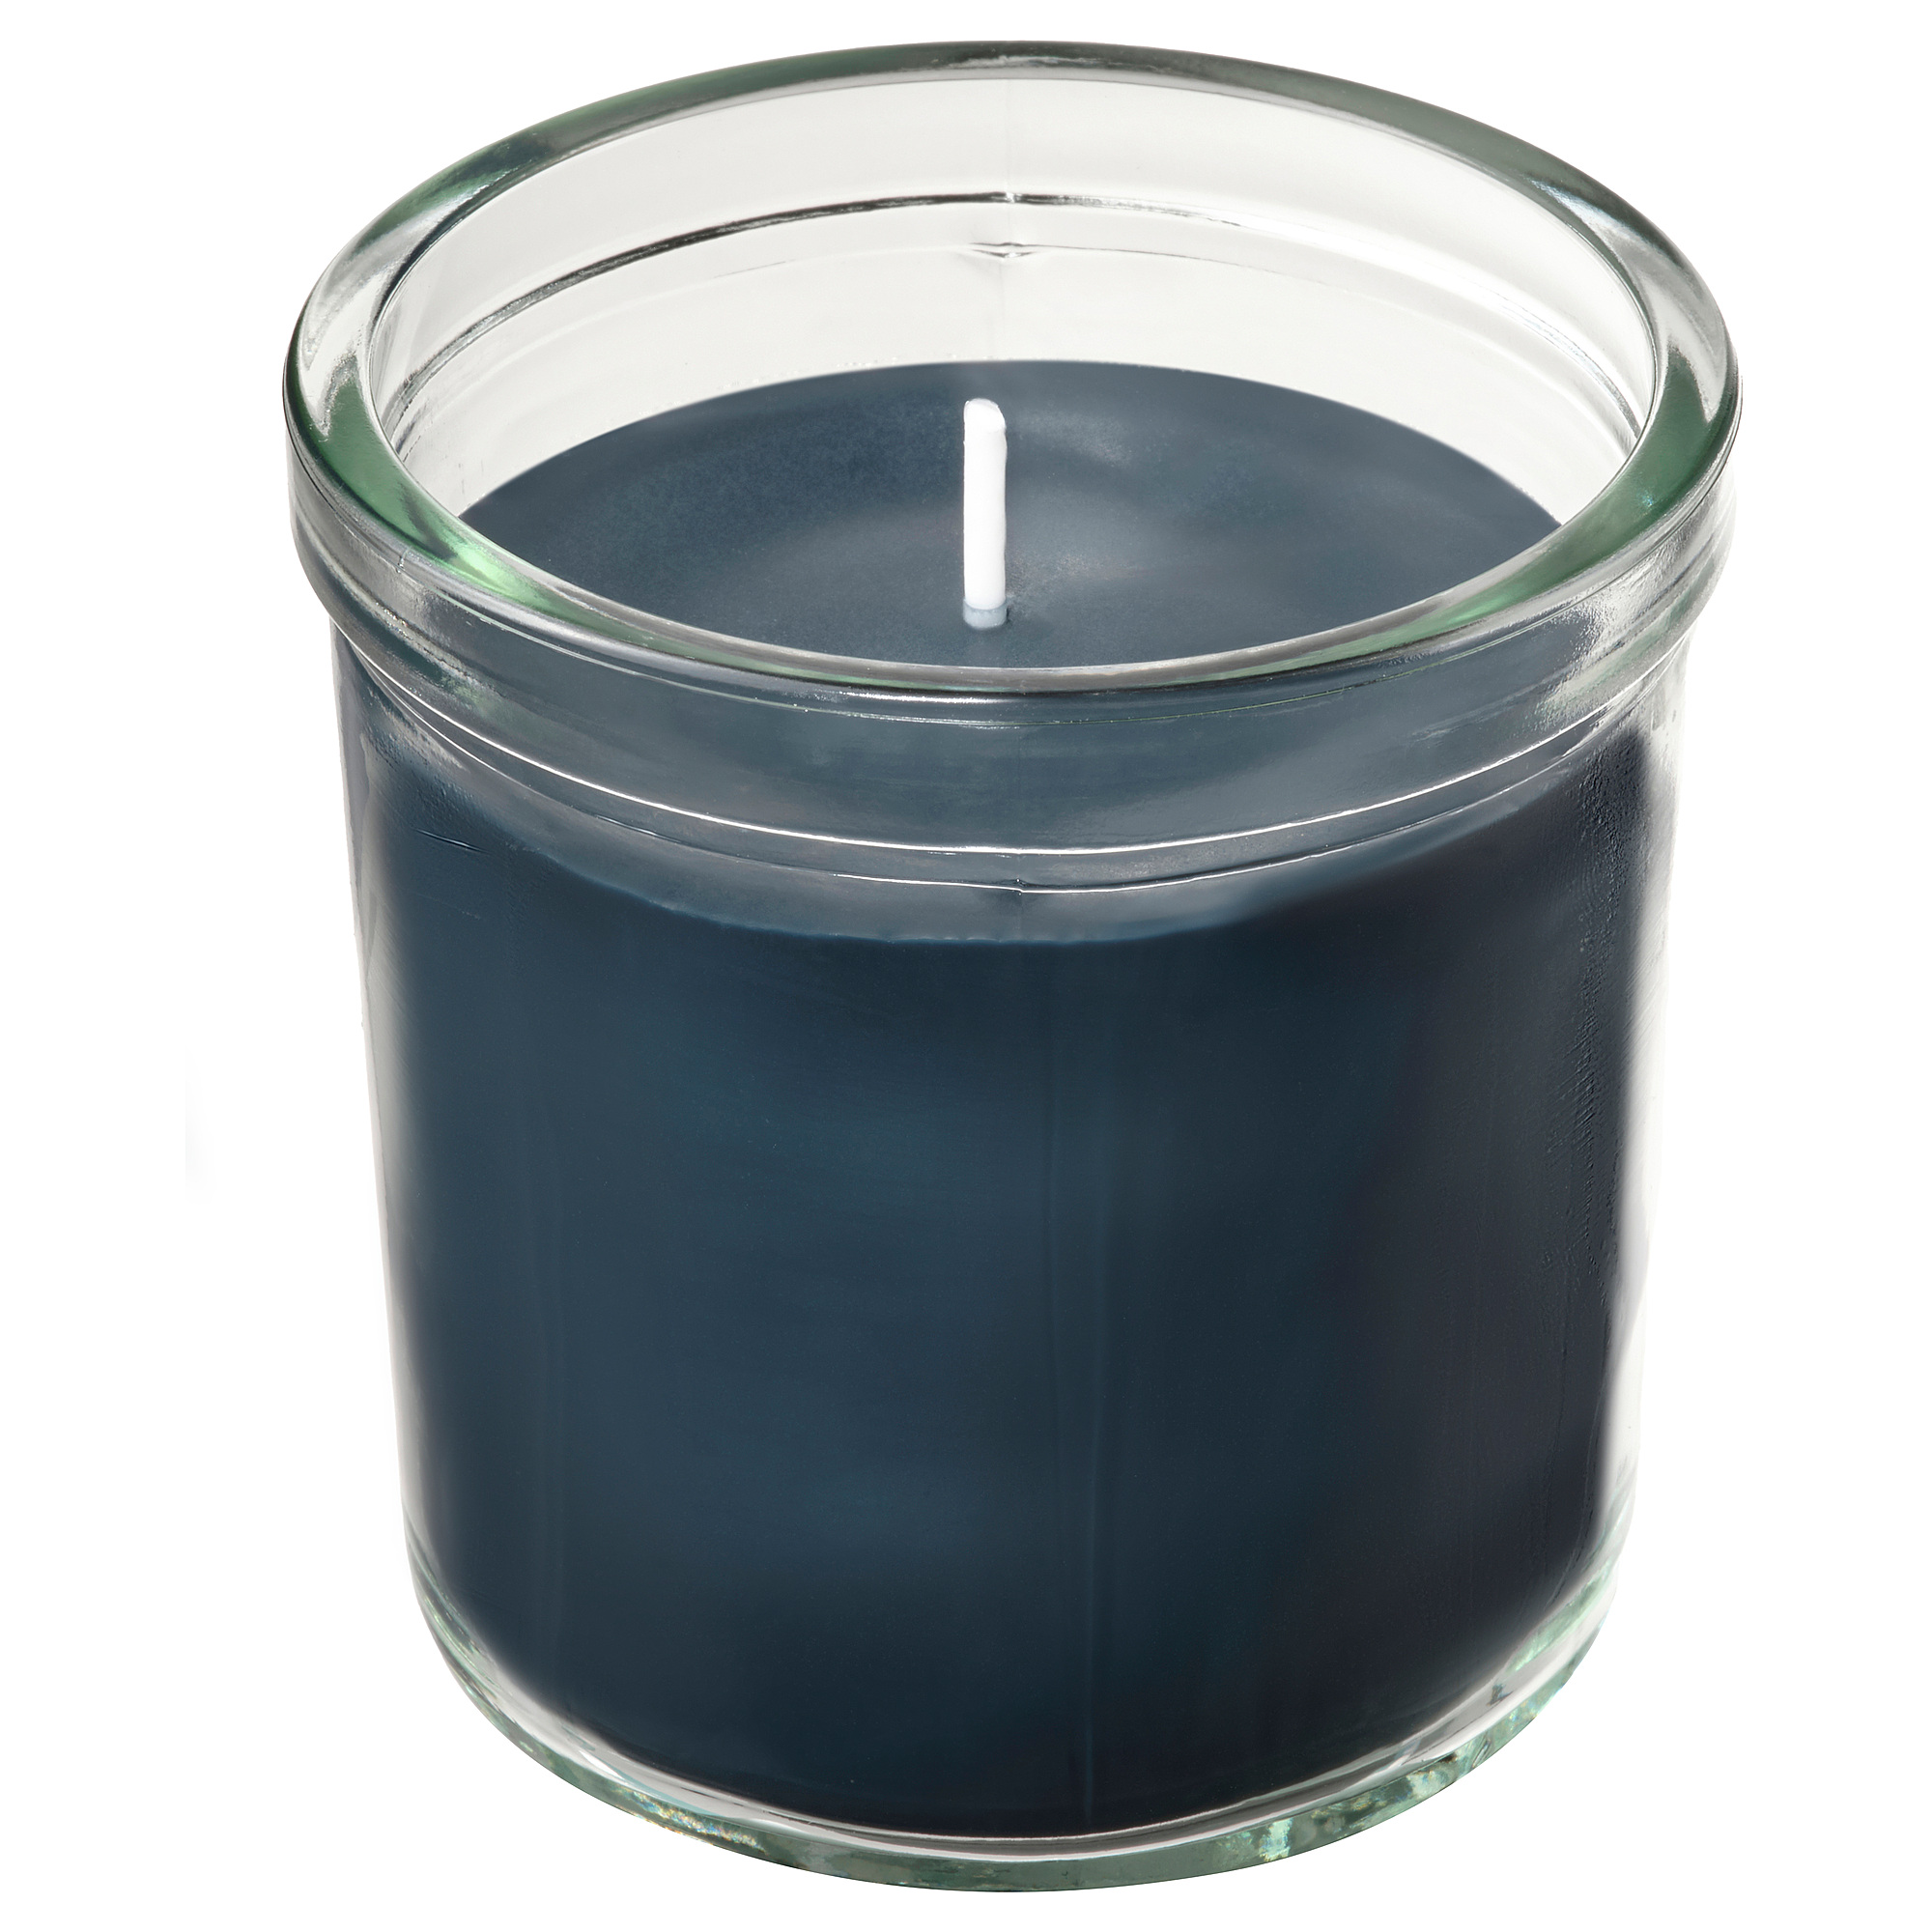 FRUKTSKOG scented candle in glass